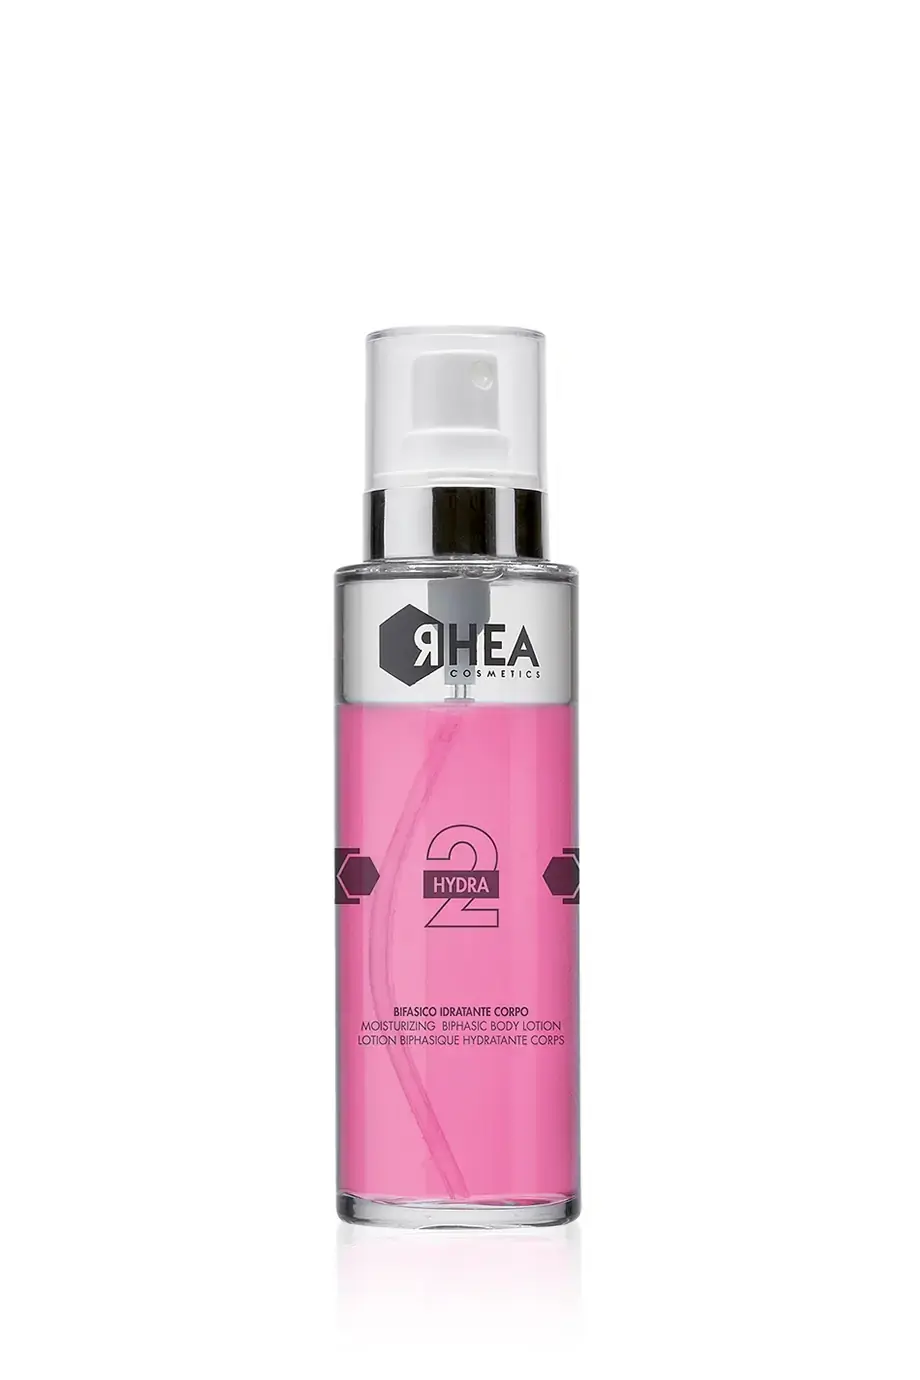 RHEA Cosmetics 2Hydra - Moisturizing Biphasic Body Lotion